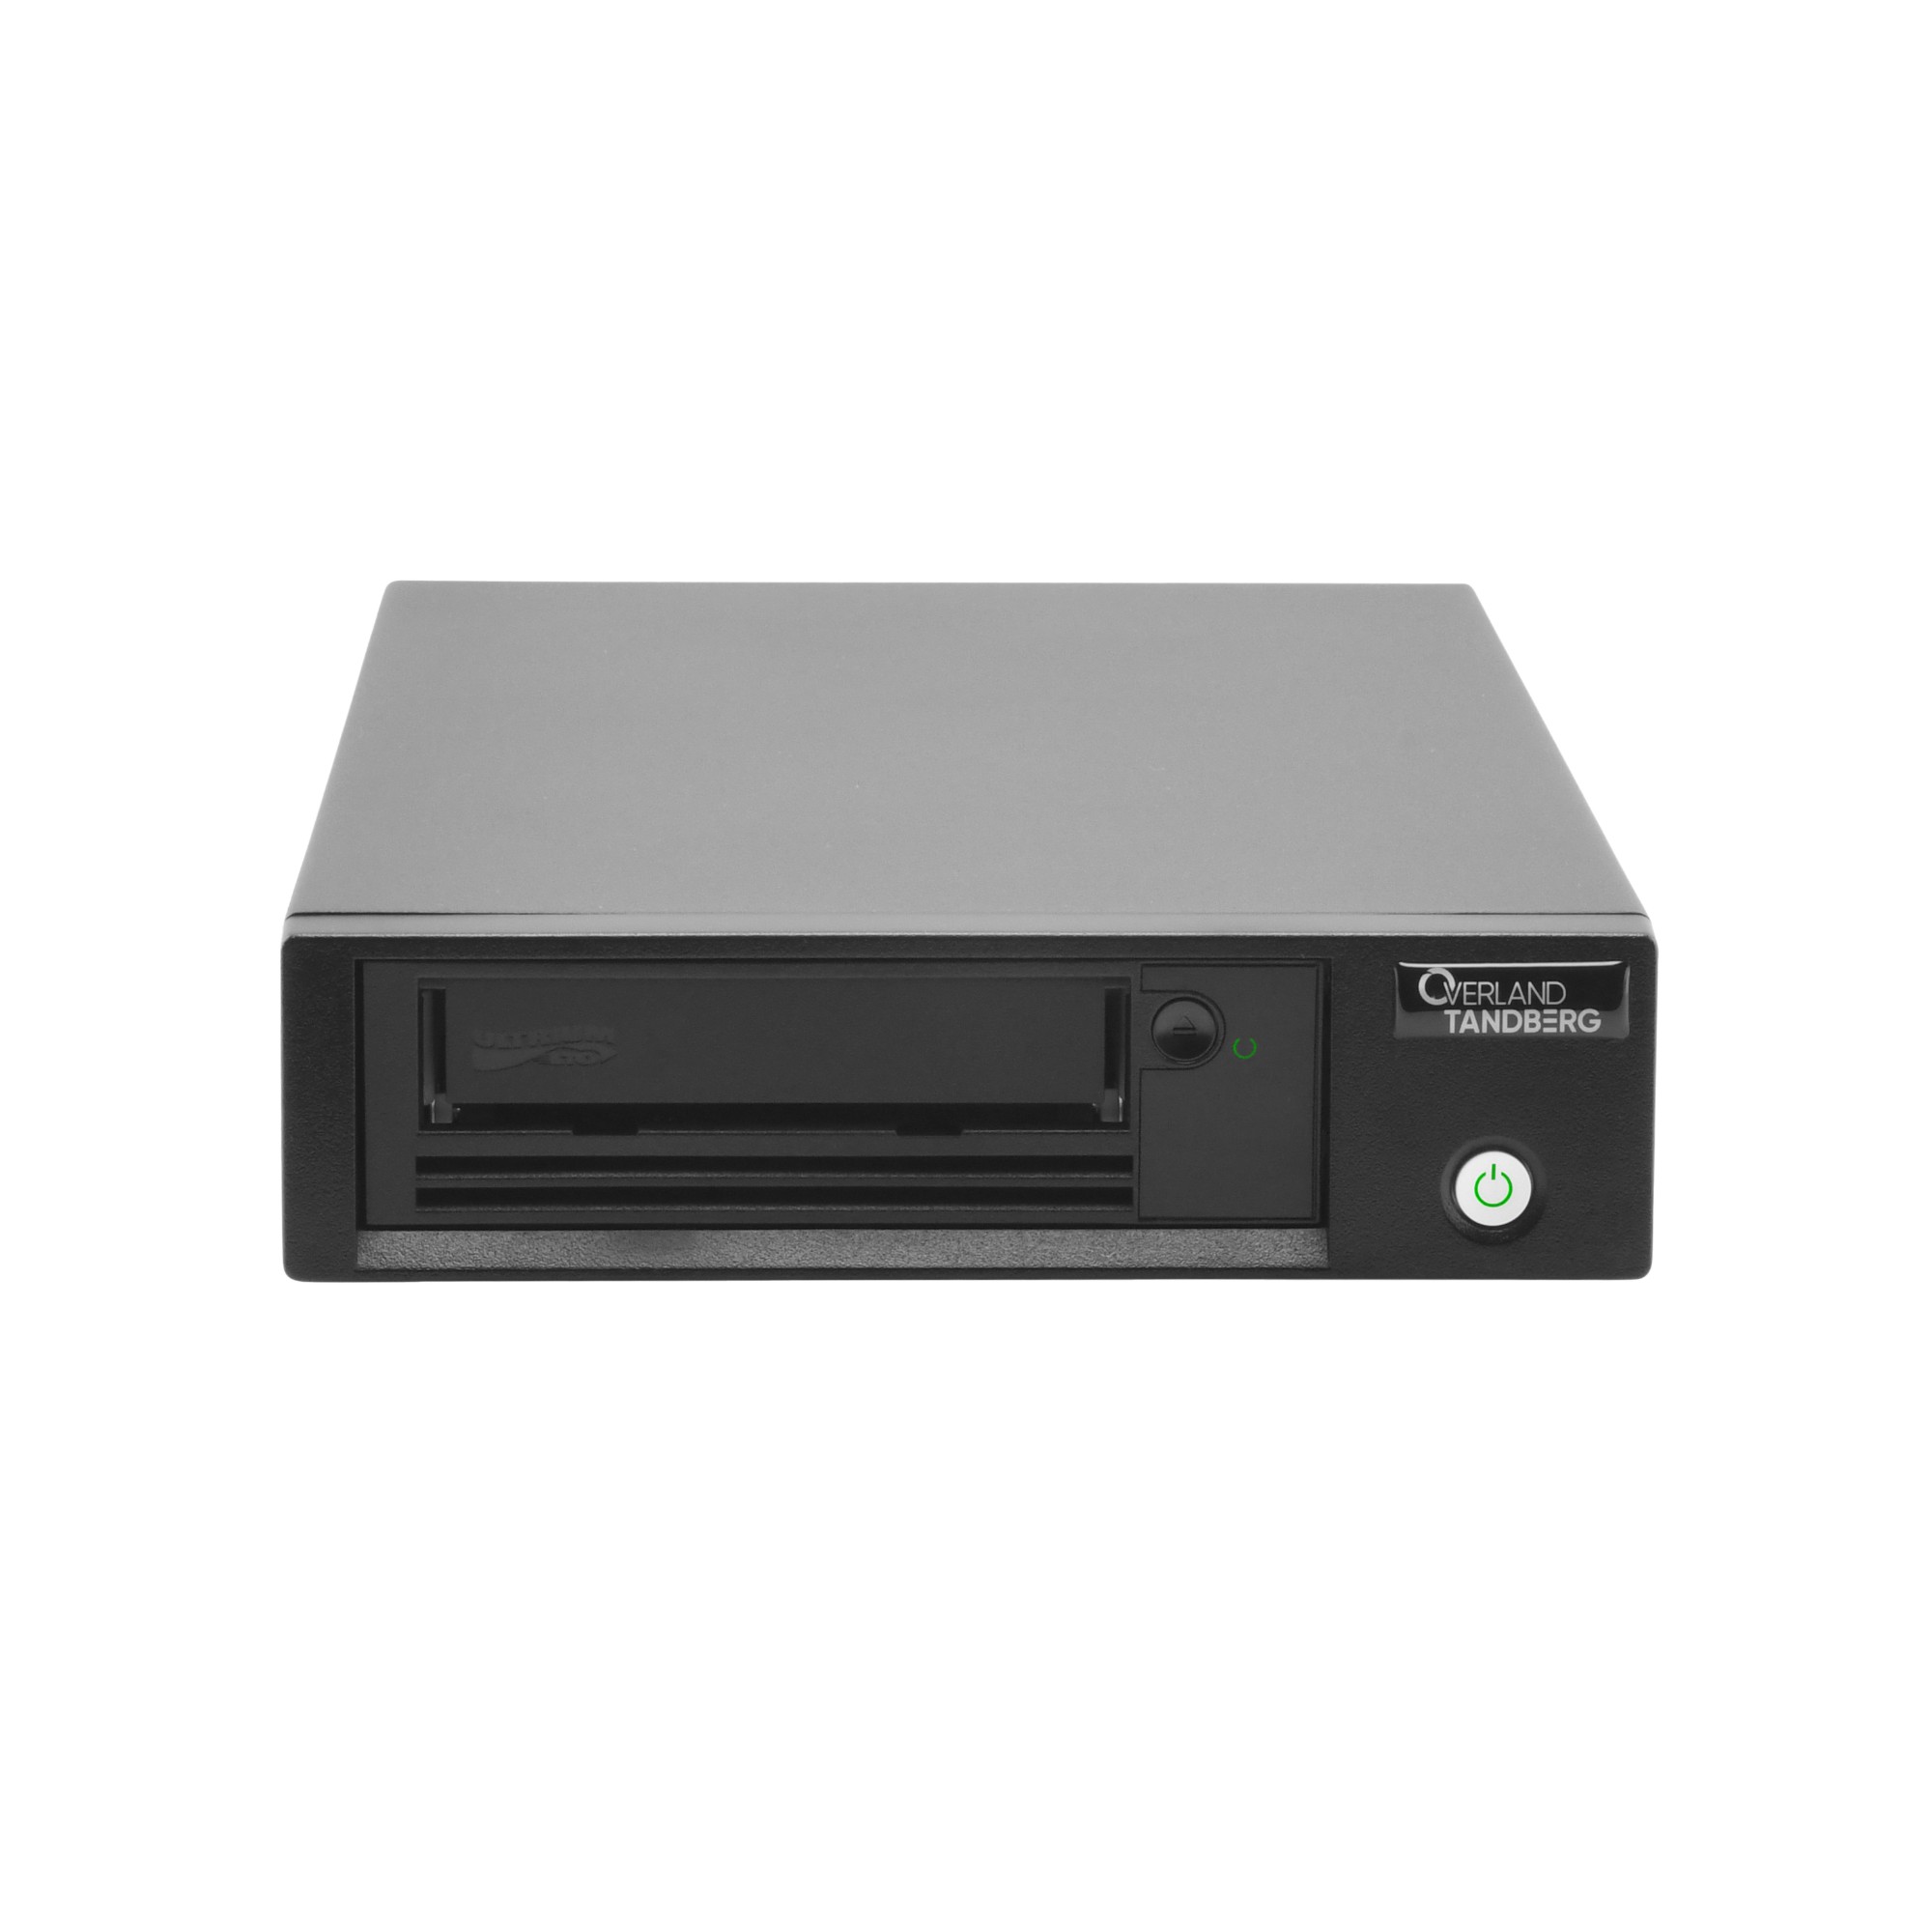 Photos - NAS Server Tandberg Data Overland-Tandberg LTO8HH SAS External Tape Drive Kit with LTO8 Data Ca TD 